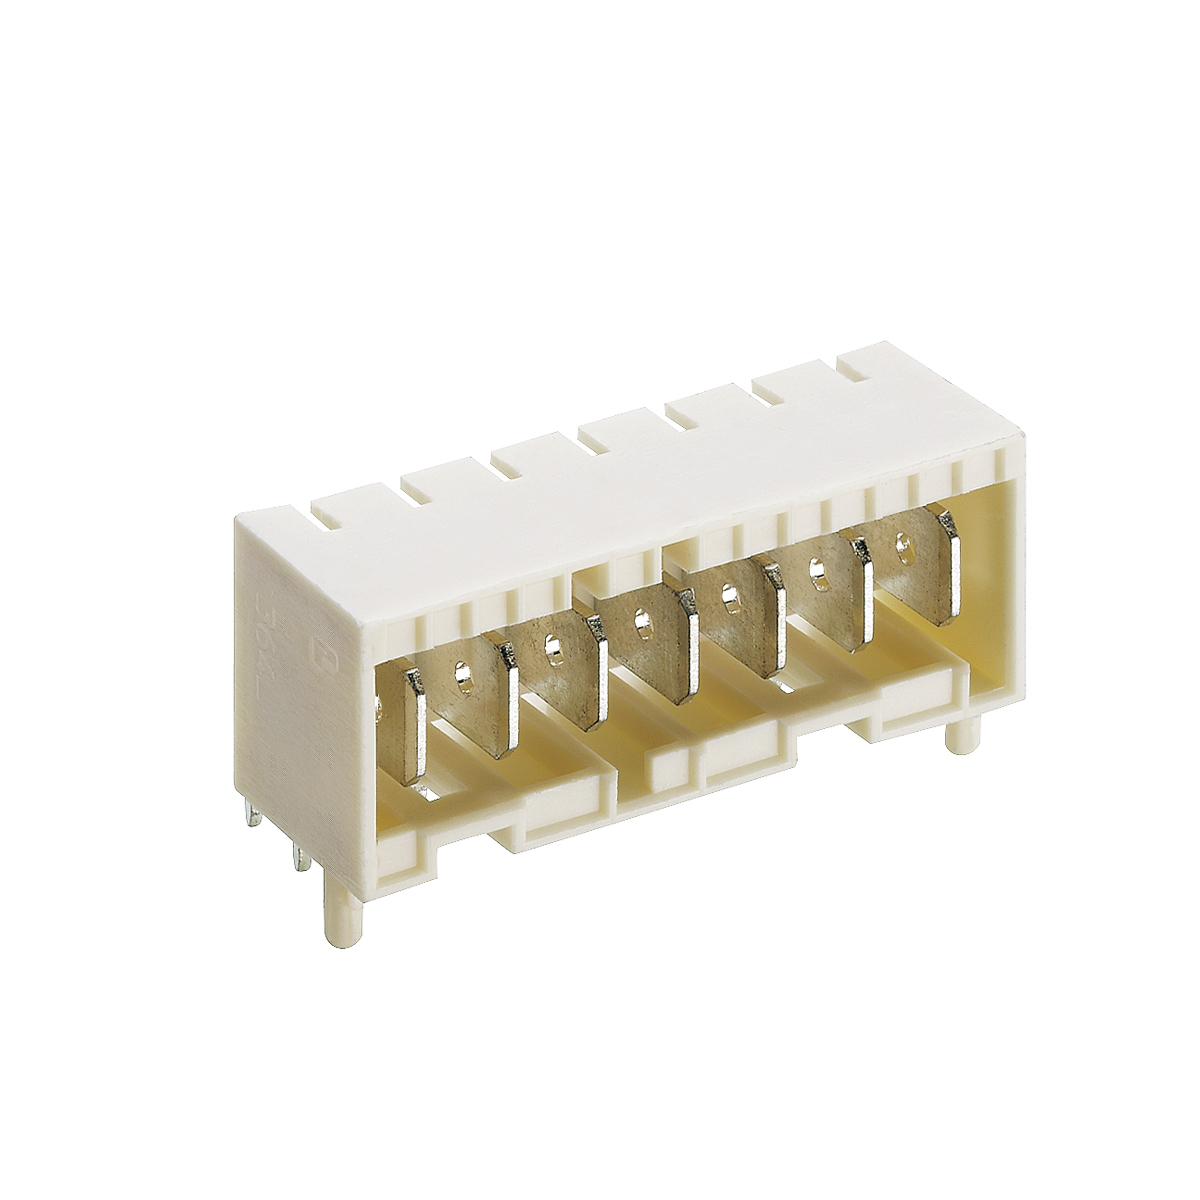 Lumberg: 3644 V167 (Series 36 | RAST 5 connectors, pitch 5.0 mm)